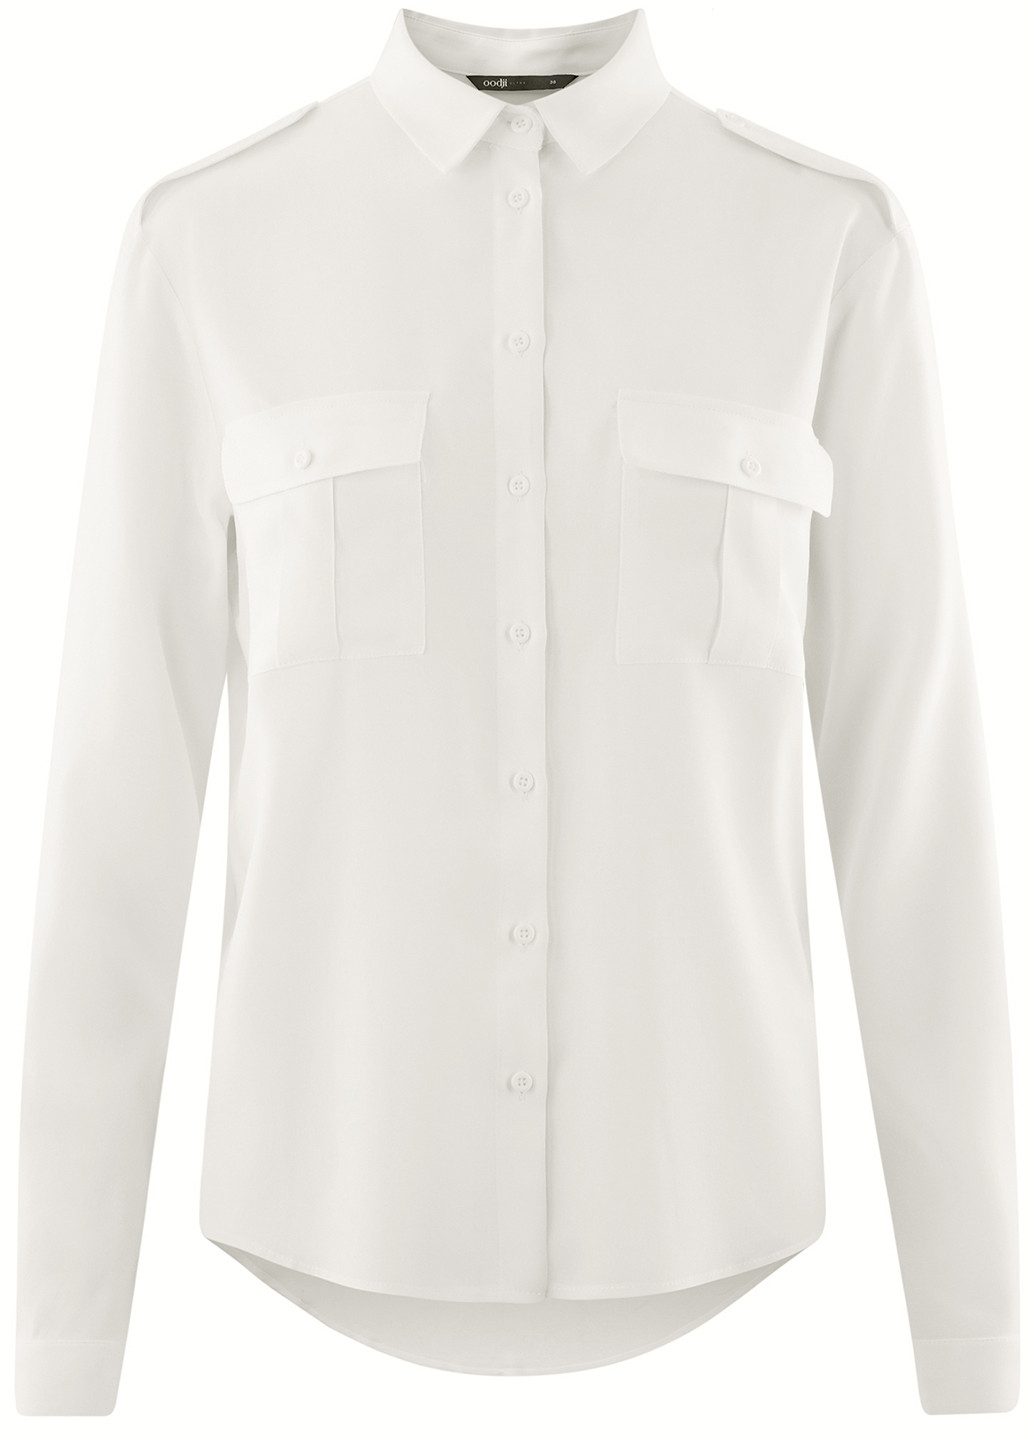 Белая демисезонная блуза Oodji